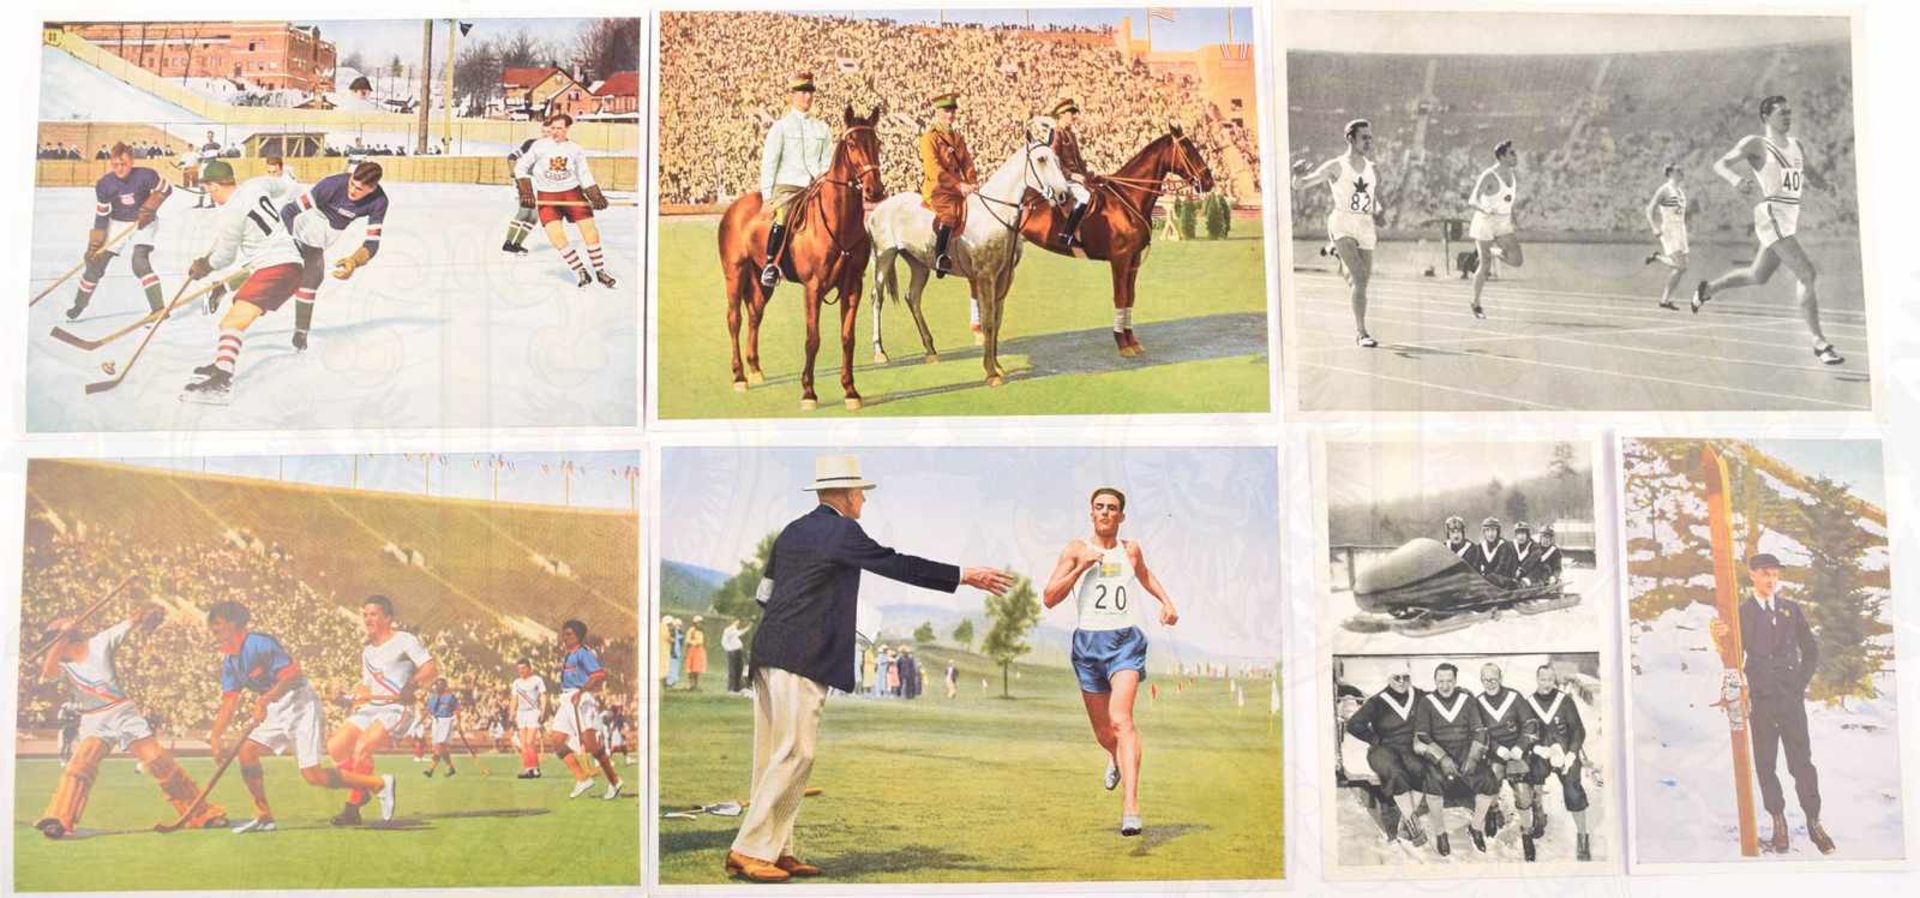 OLYMPIA 1932, 103 Bilder (3 dopplet), tls. farb. unterschiedl. Formate, Reemtsma, im orig. Umschlag